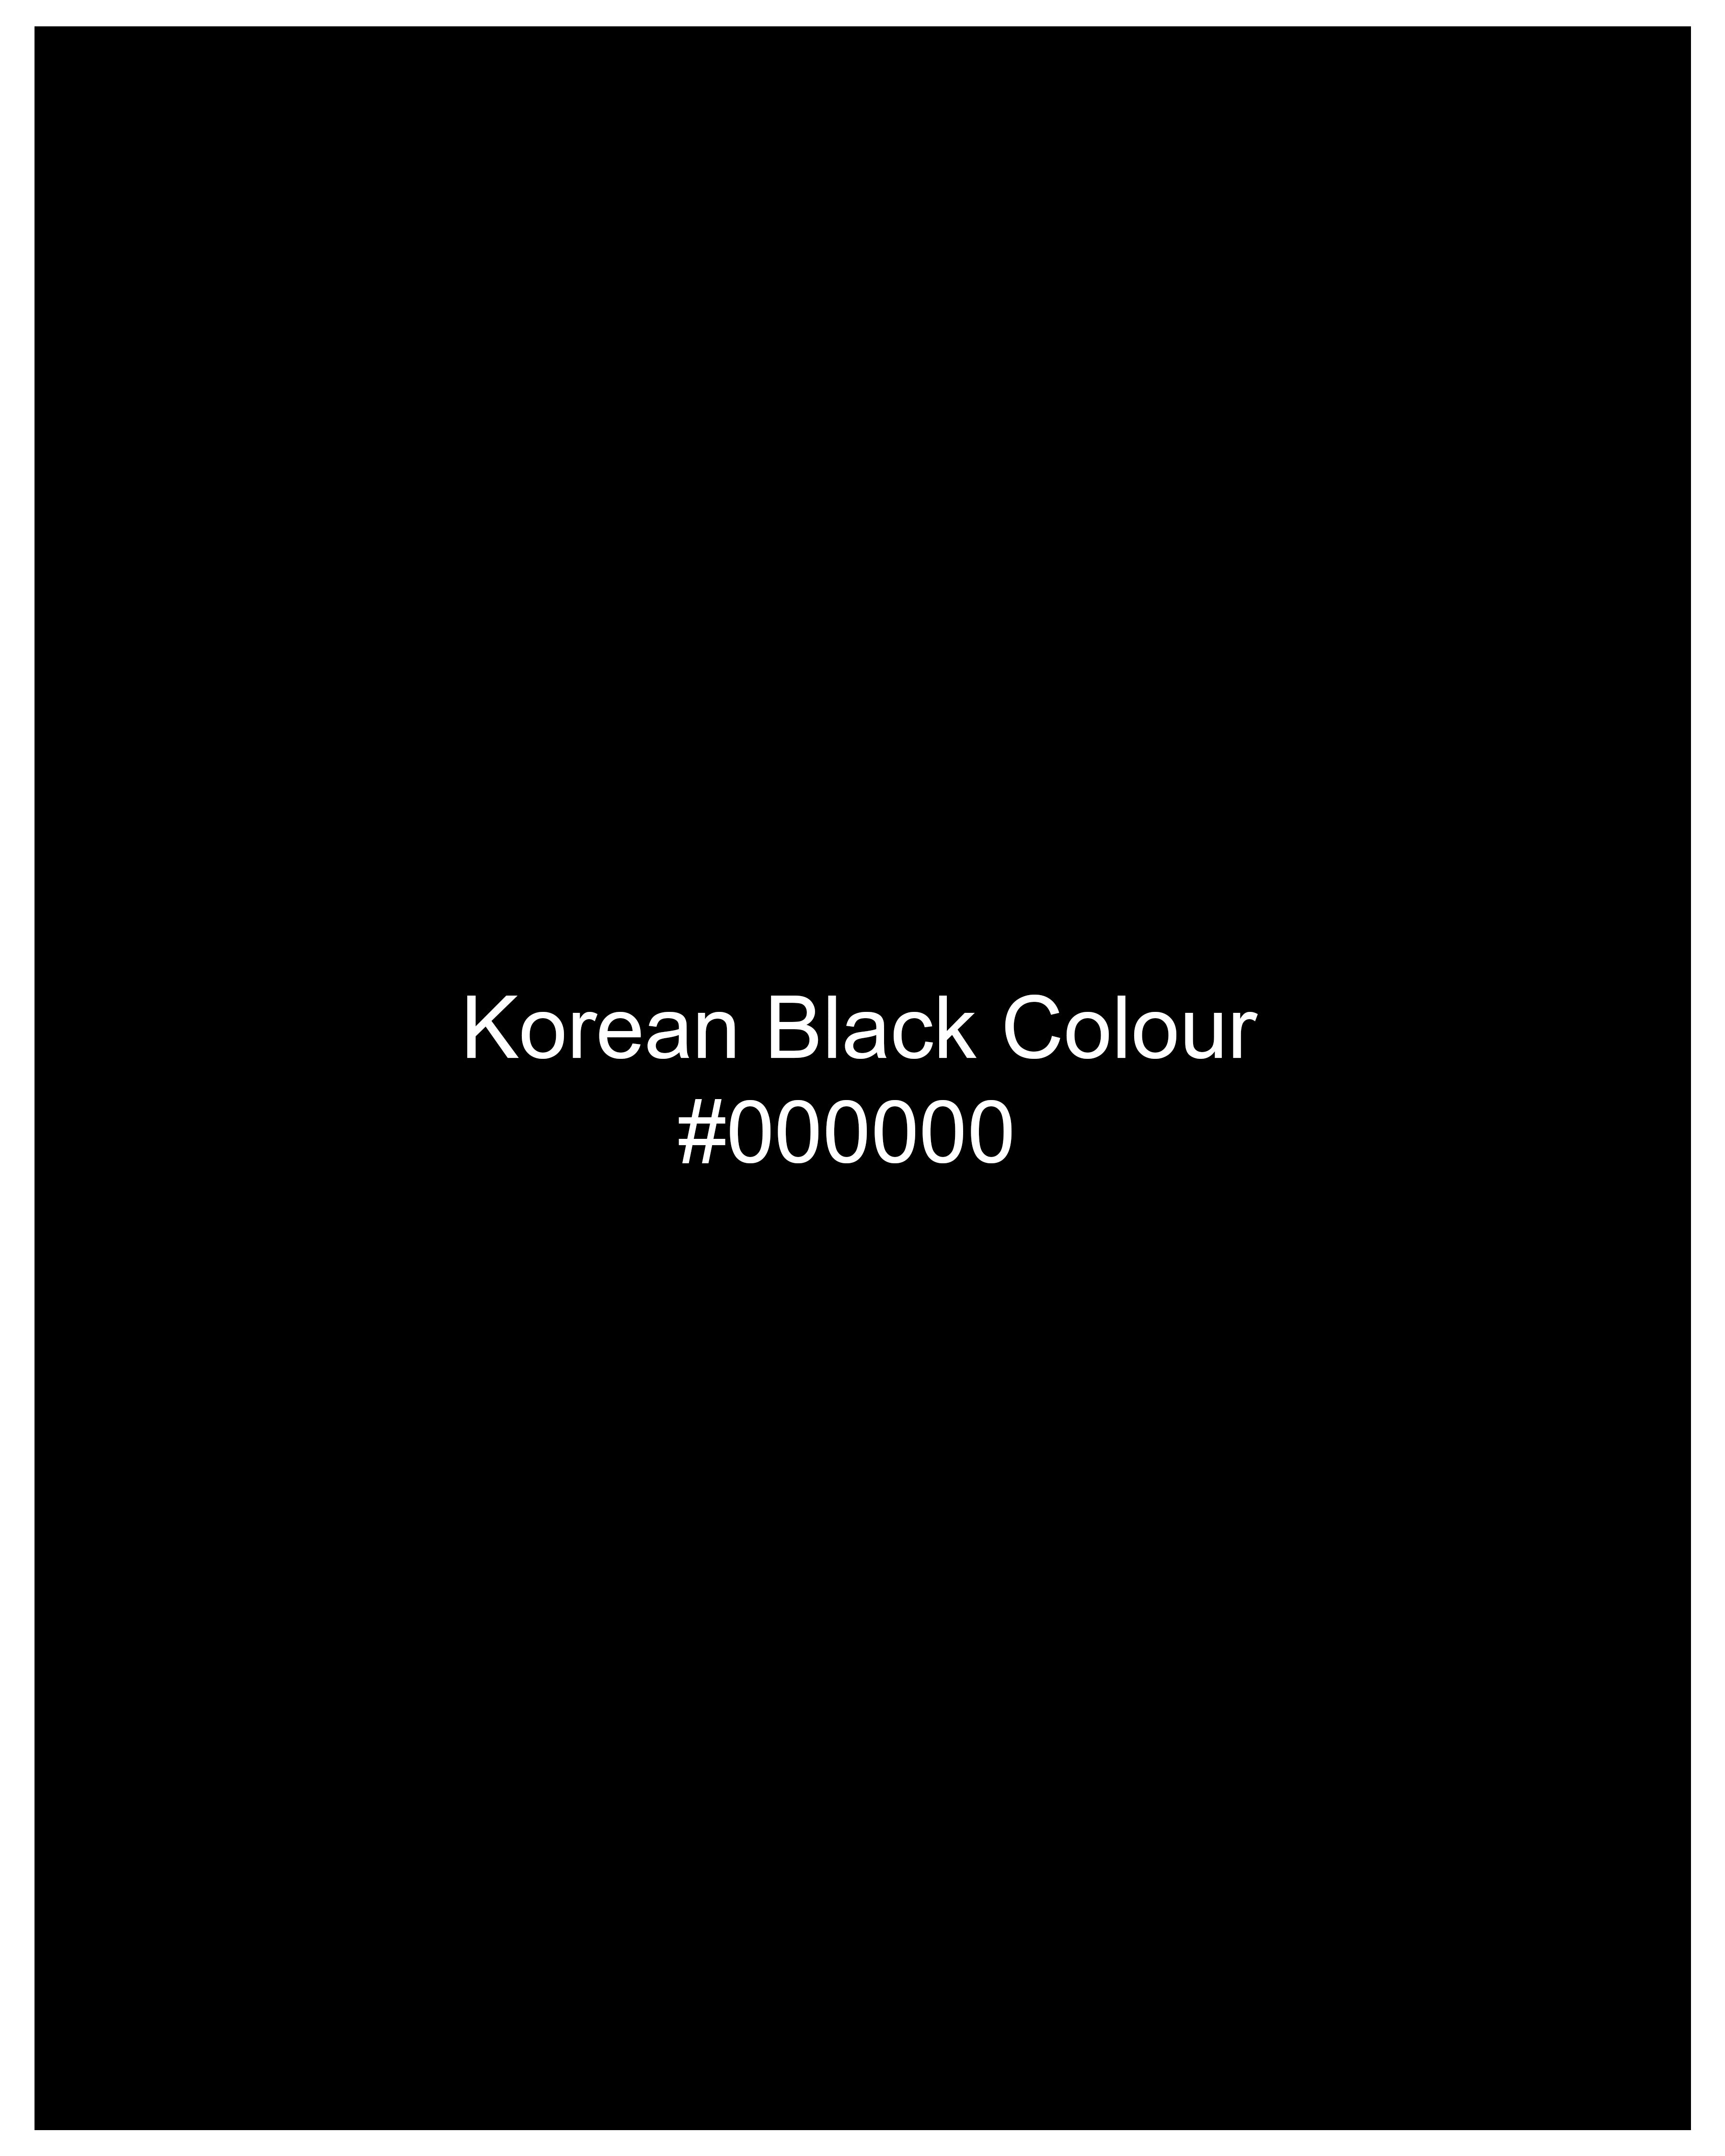 Korean Black (The Best Black We Have) Double Breasted Suit ST2609-DB-36, ST2609-DB-38, ST2609-DB-40, ST2609-DB-42, ST2609-DB-44, ST2609-DB-46, ST2609-DB-48, ST2609-DB-50, ST2609-DB-52, ST2609-DB-54, ST2609-DB-56, ST2609-DB-58, ST2609-DB-60